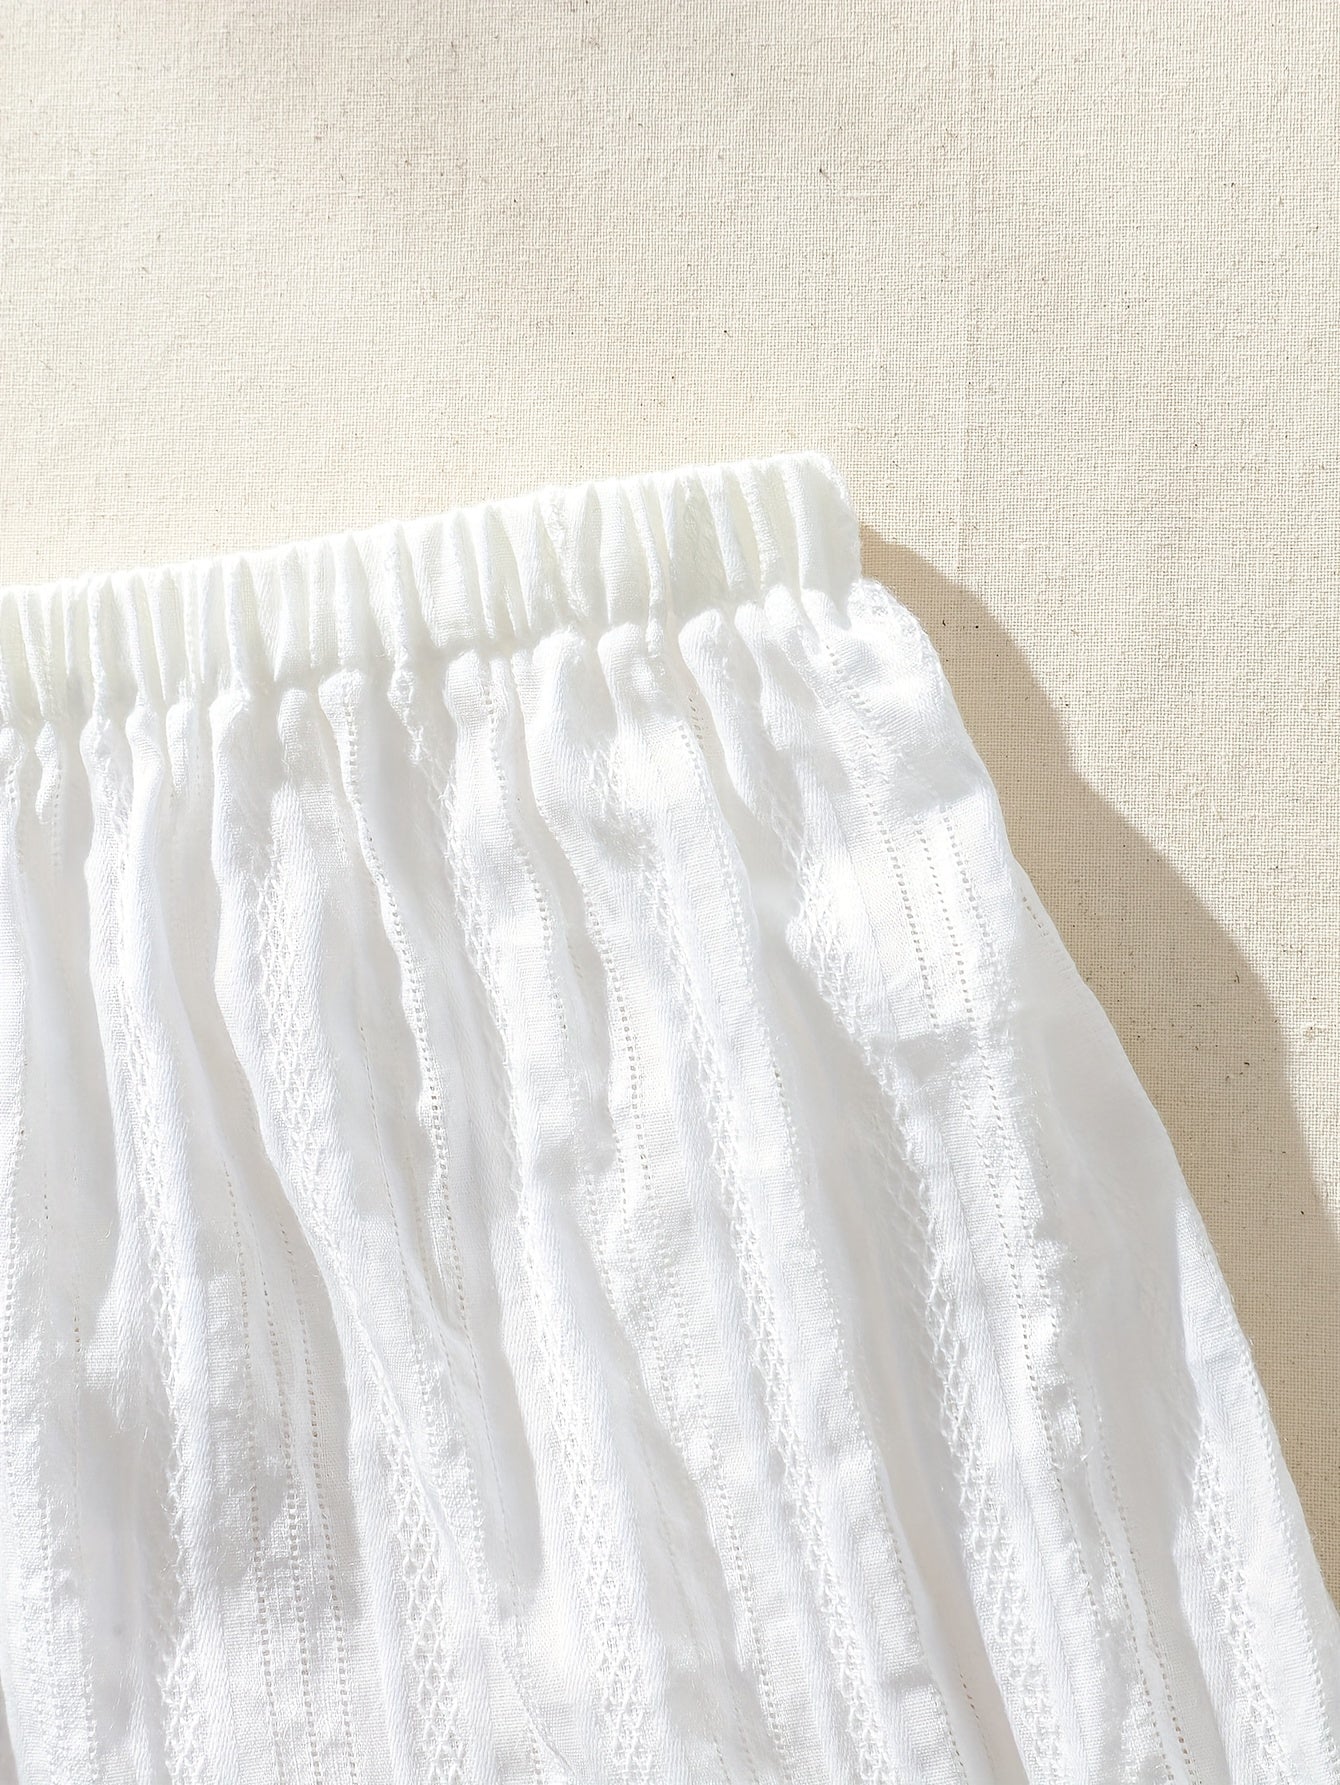 Bohemian White Cotton Shorts, Cute Lace Trim Shorts